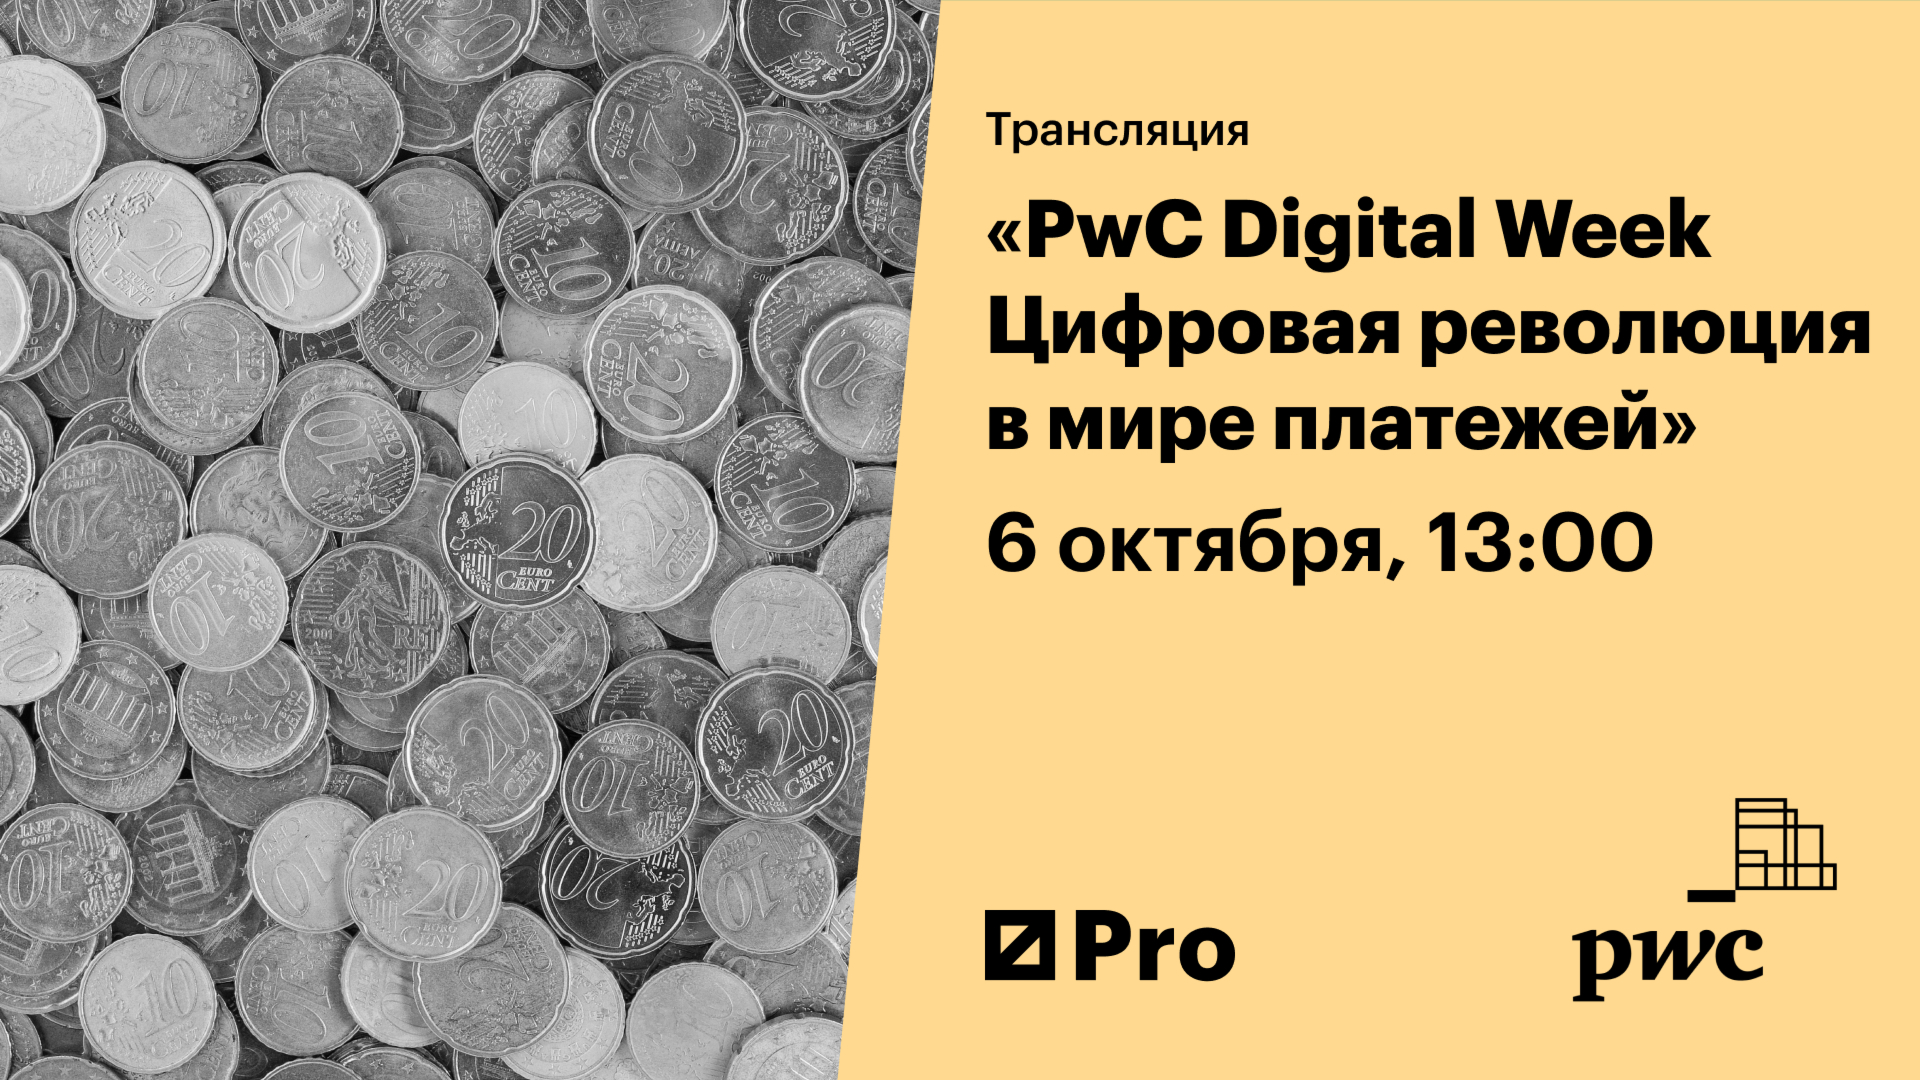 PwC Digital Week. Цифровая революция в мире платежей